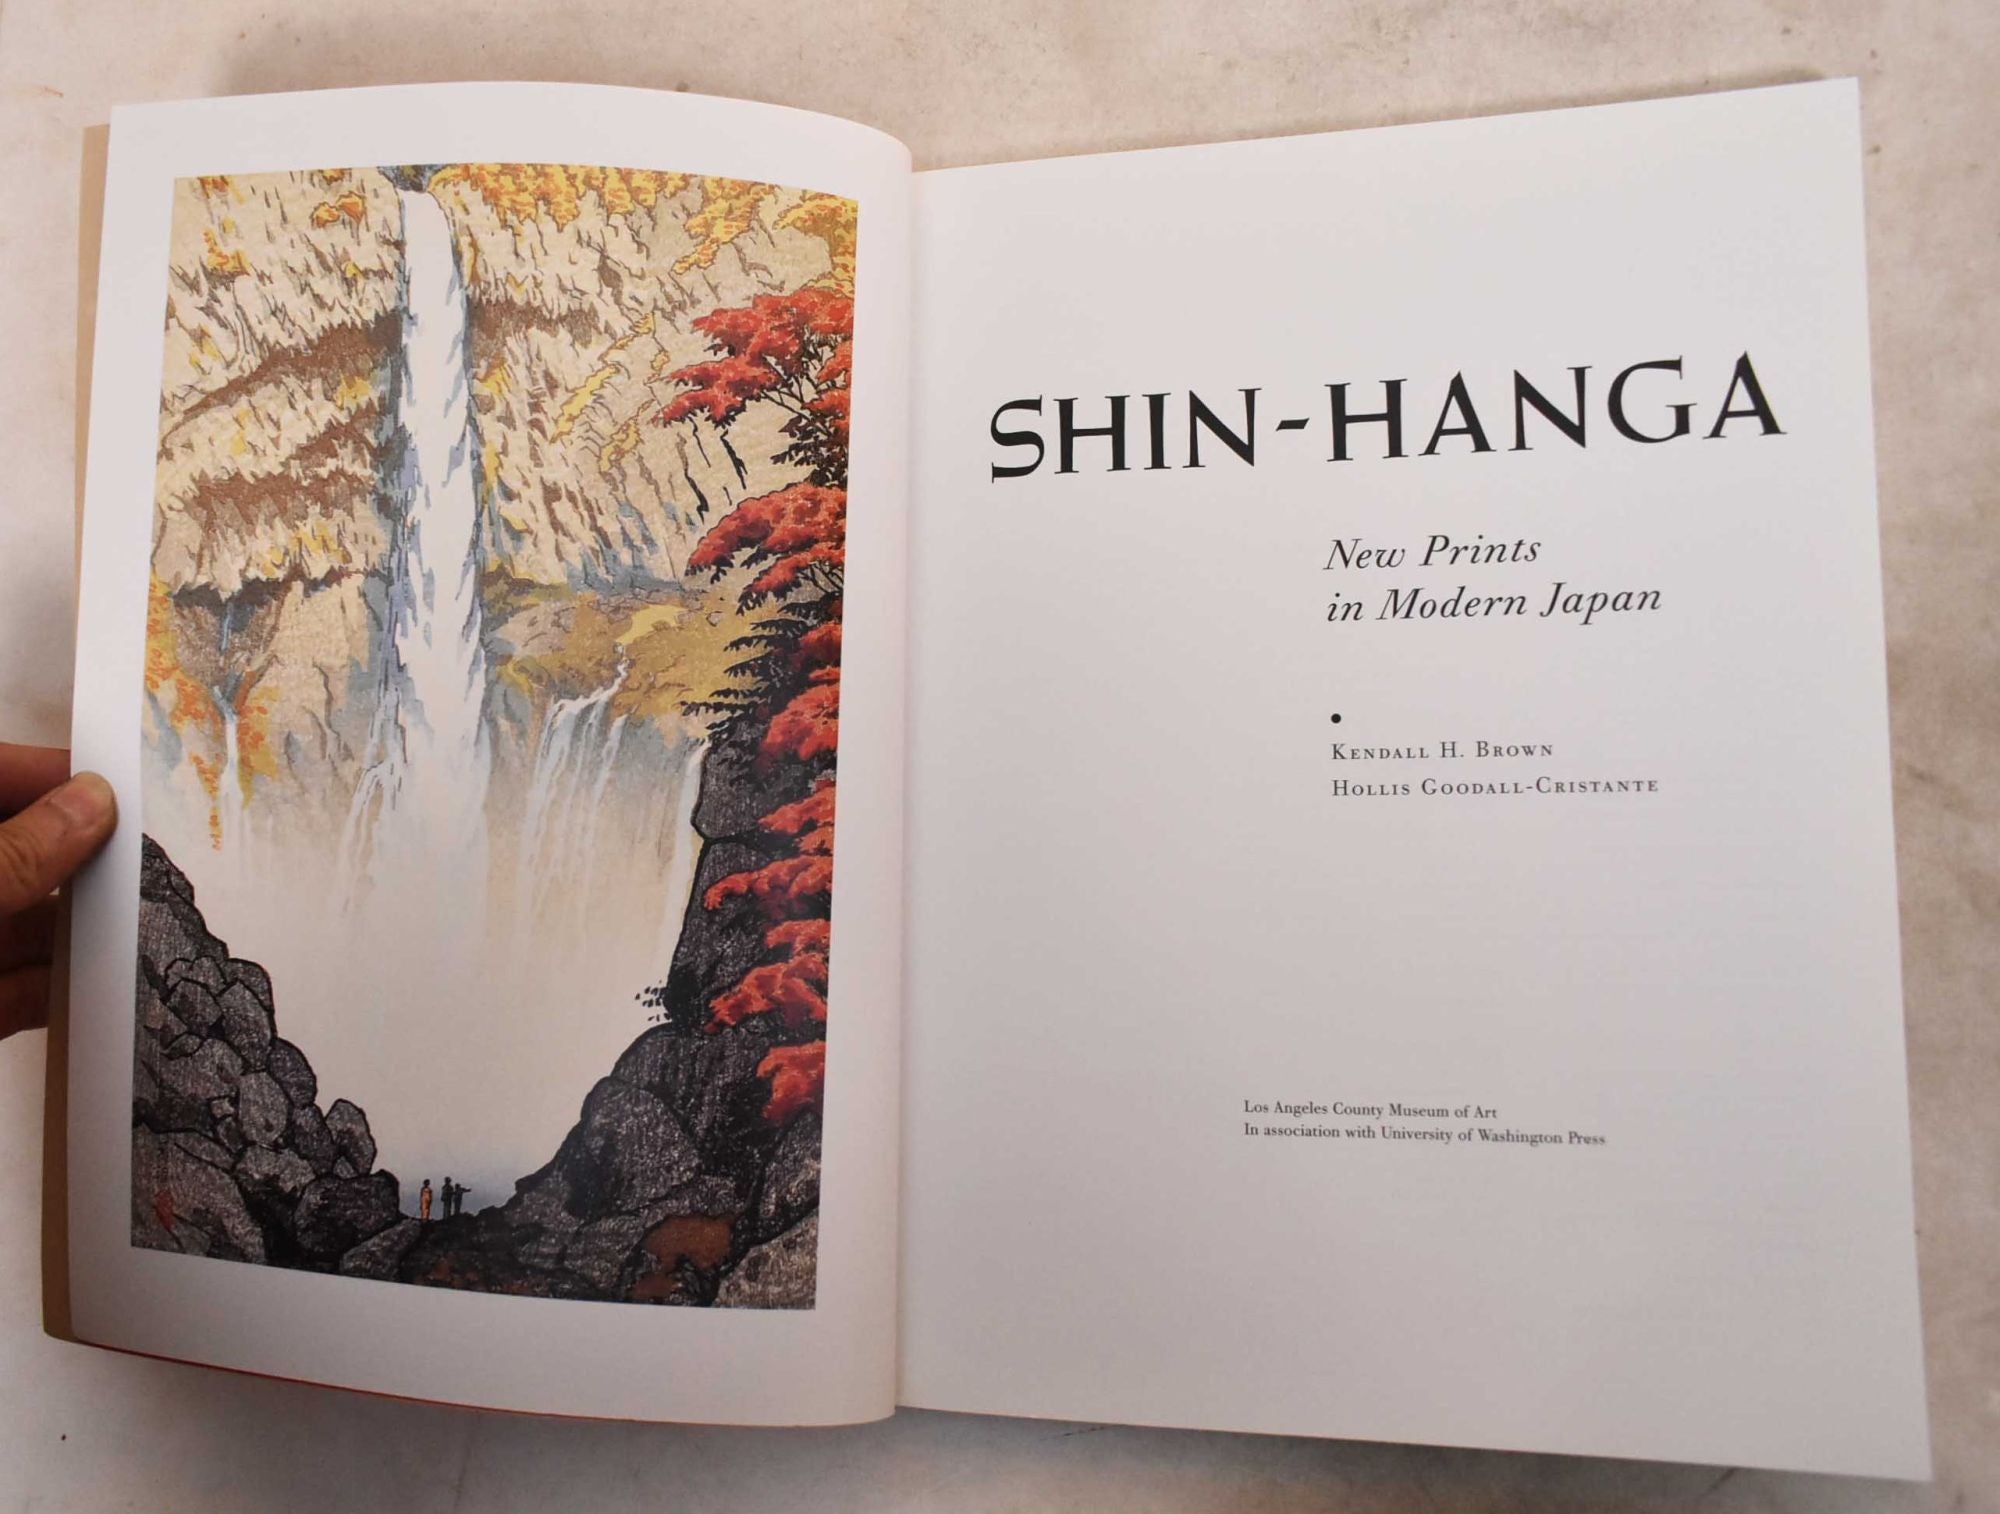 Morita Shiryu: Work And Thought by Morita Shiryu on Mullen Books